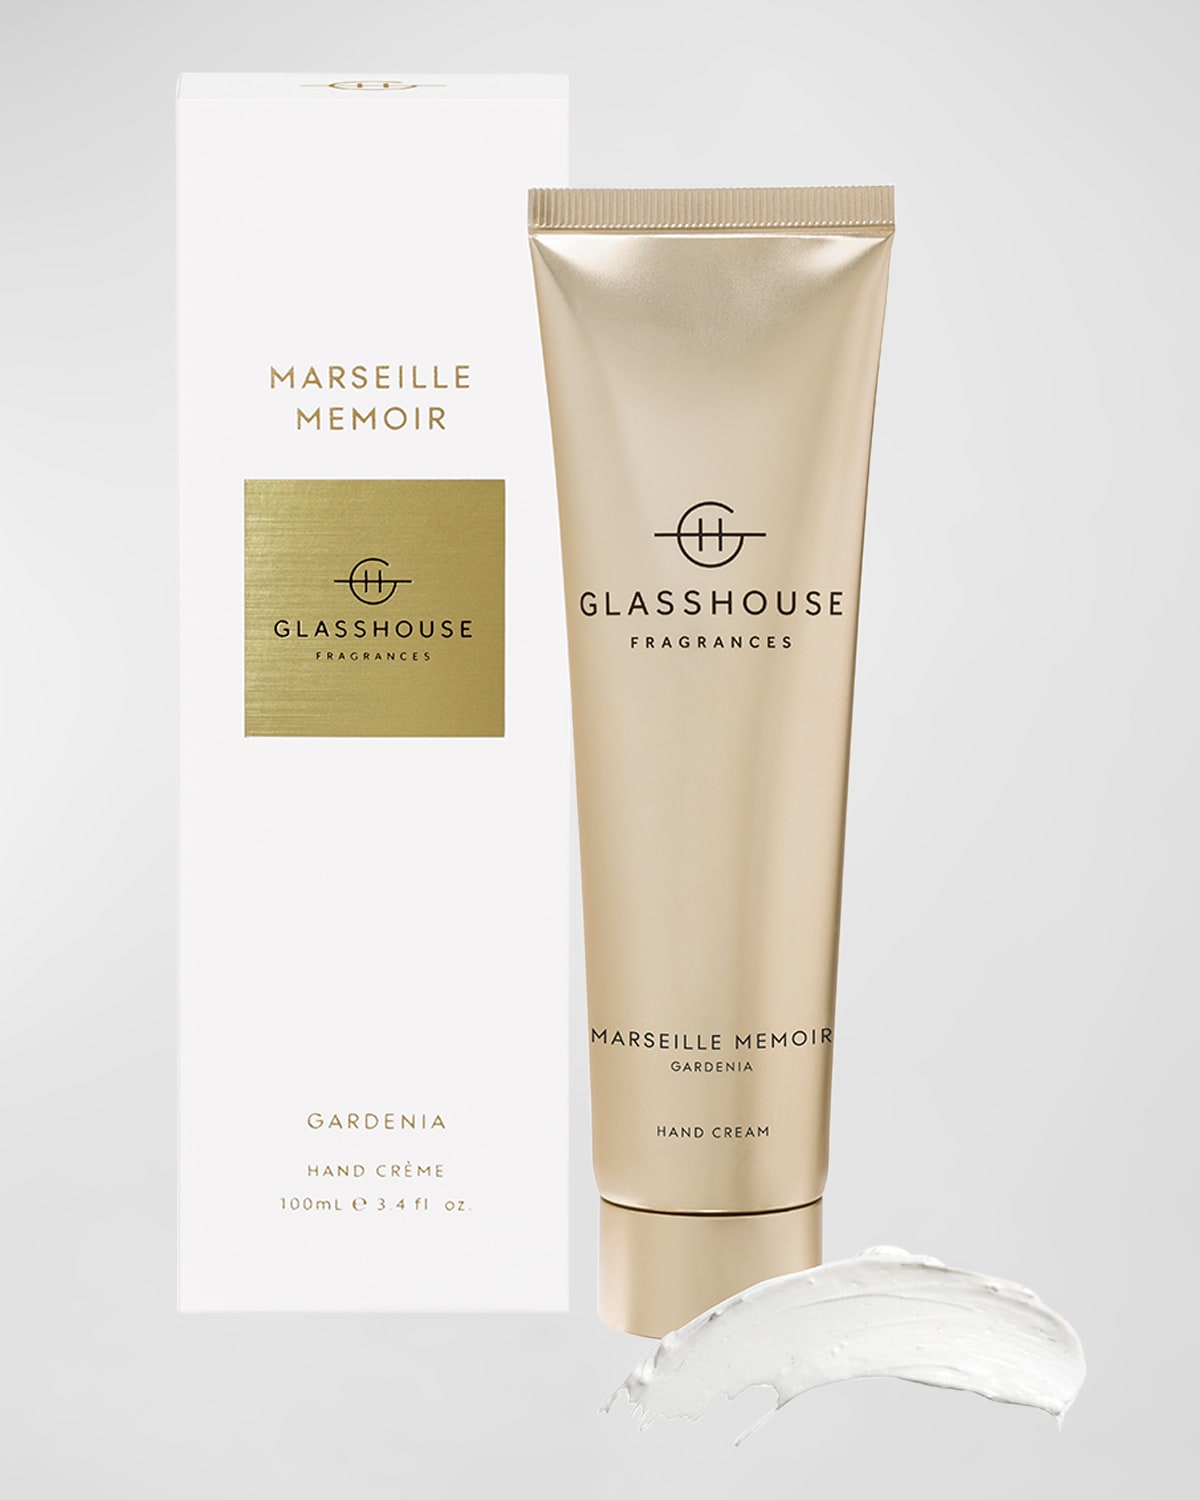 GLASSHOUSE FRAGRANCES 3.4 oz. Marseille Memoir Hand Cream